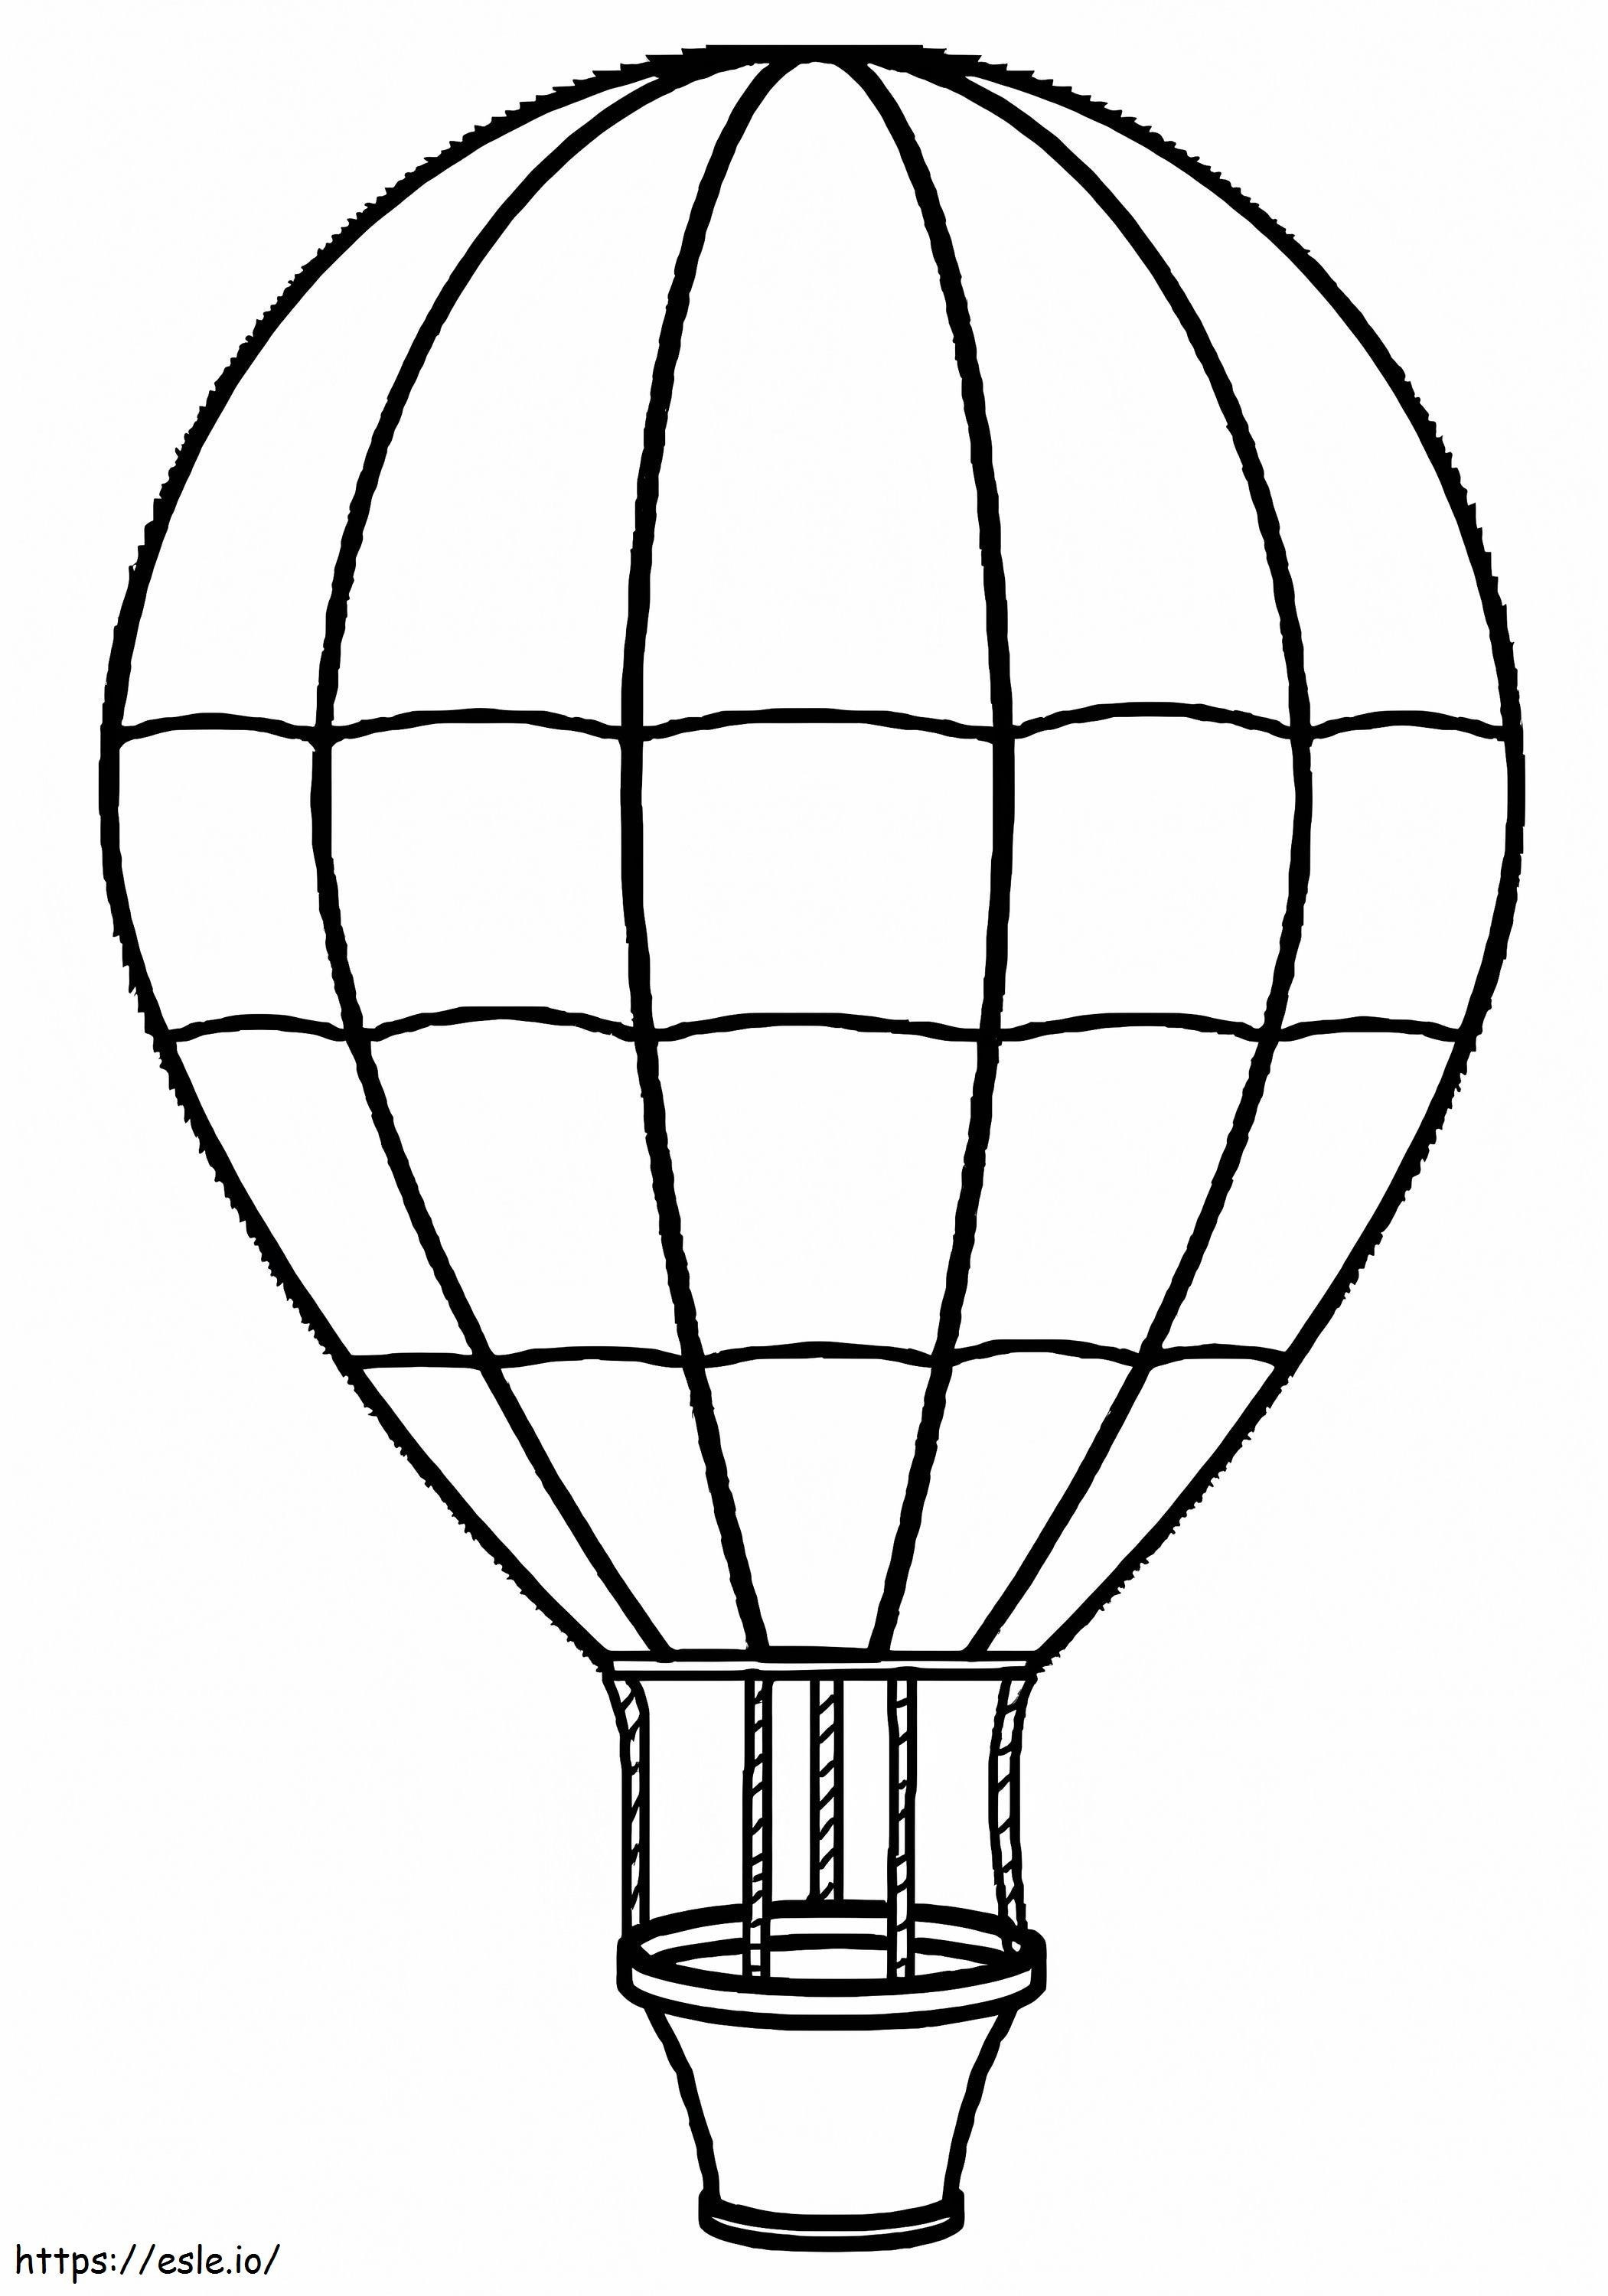 Balão de ar quente individual 2 para colorir